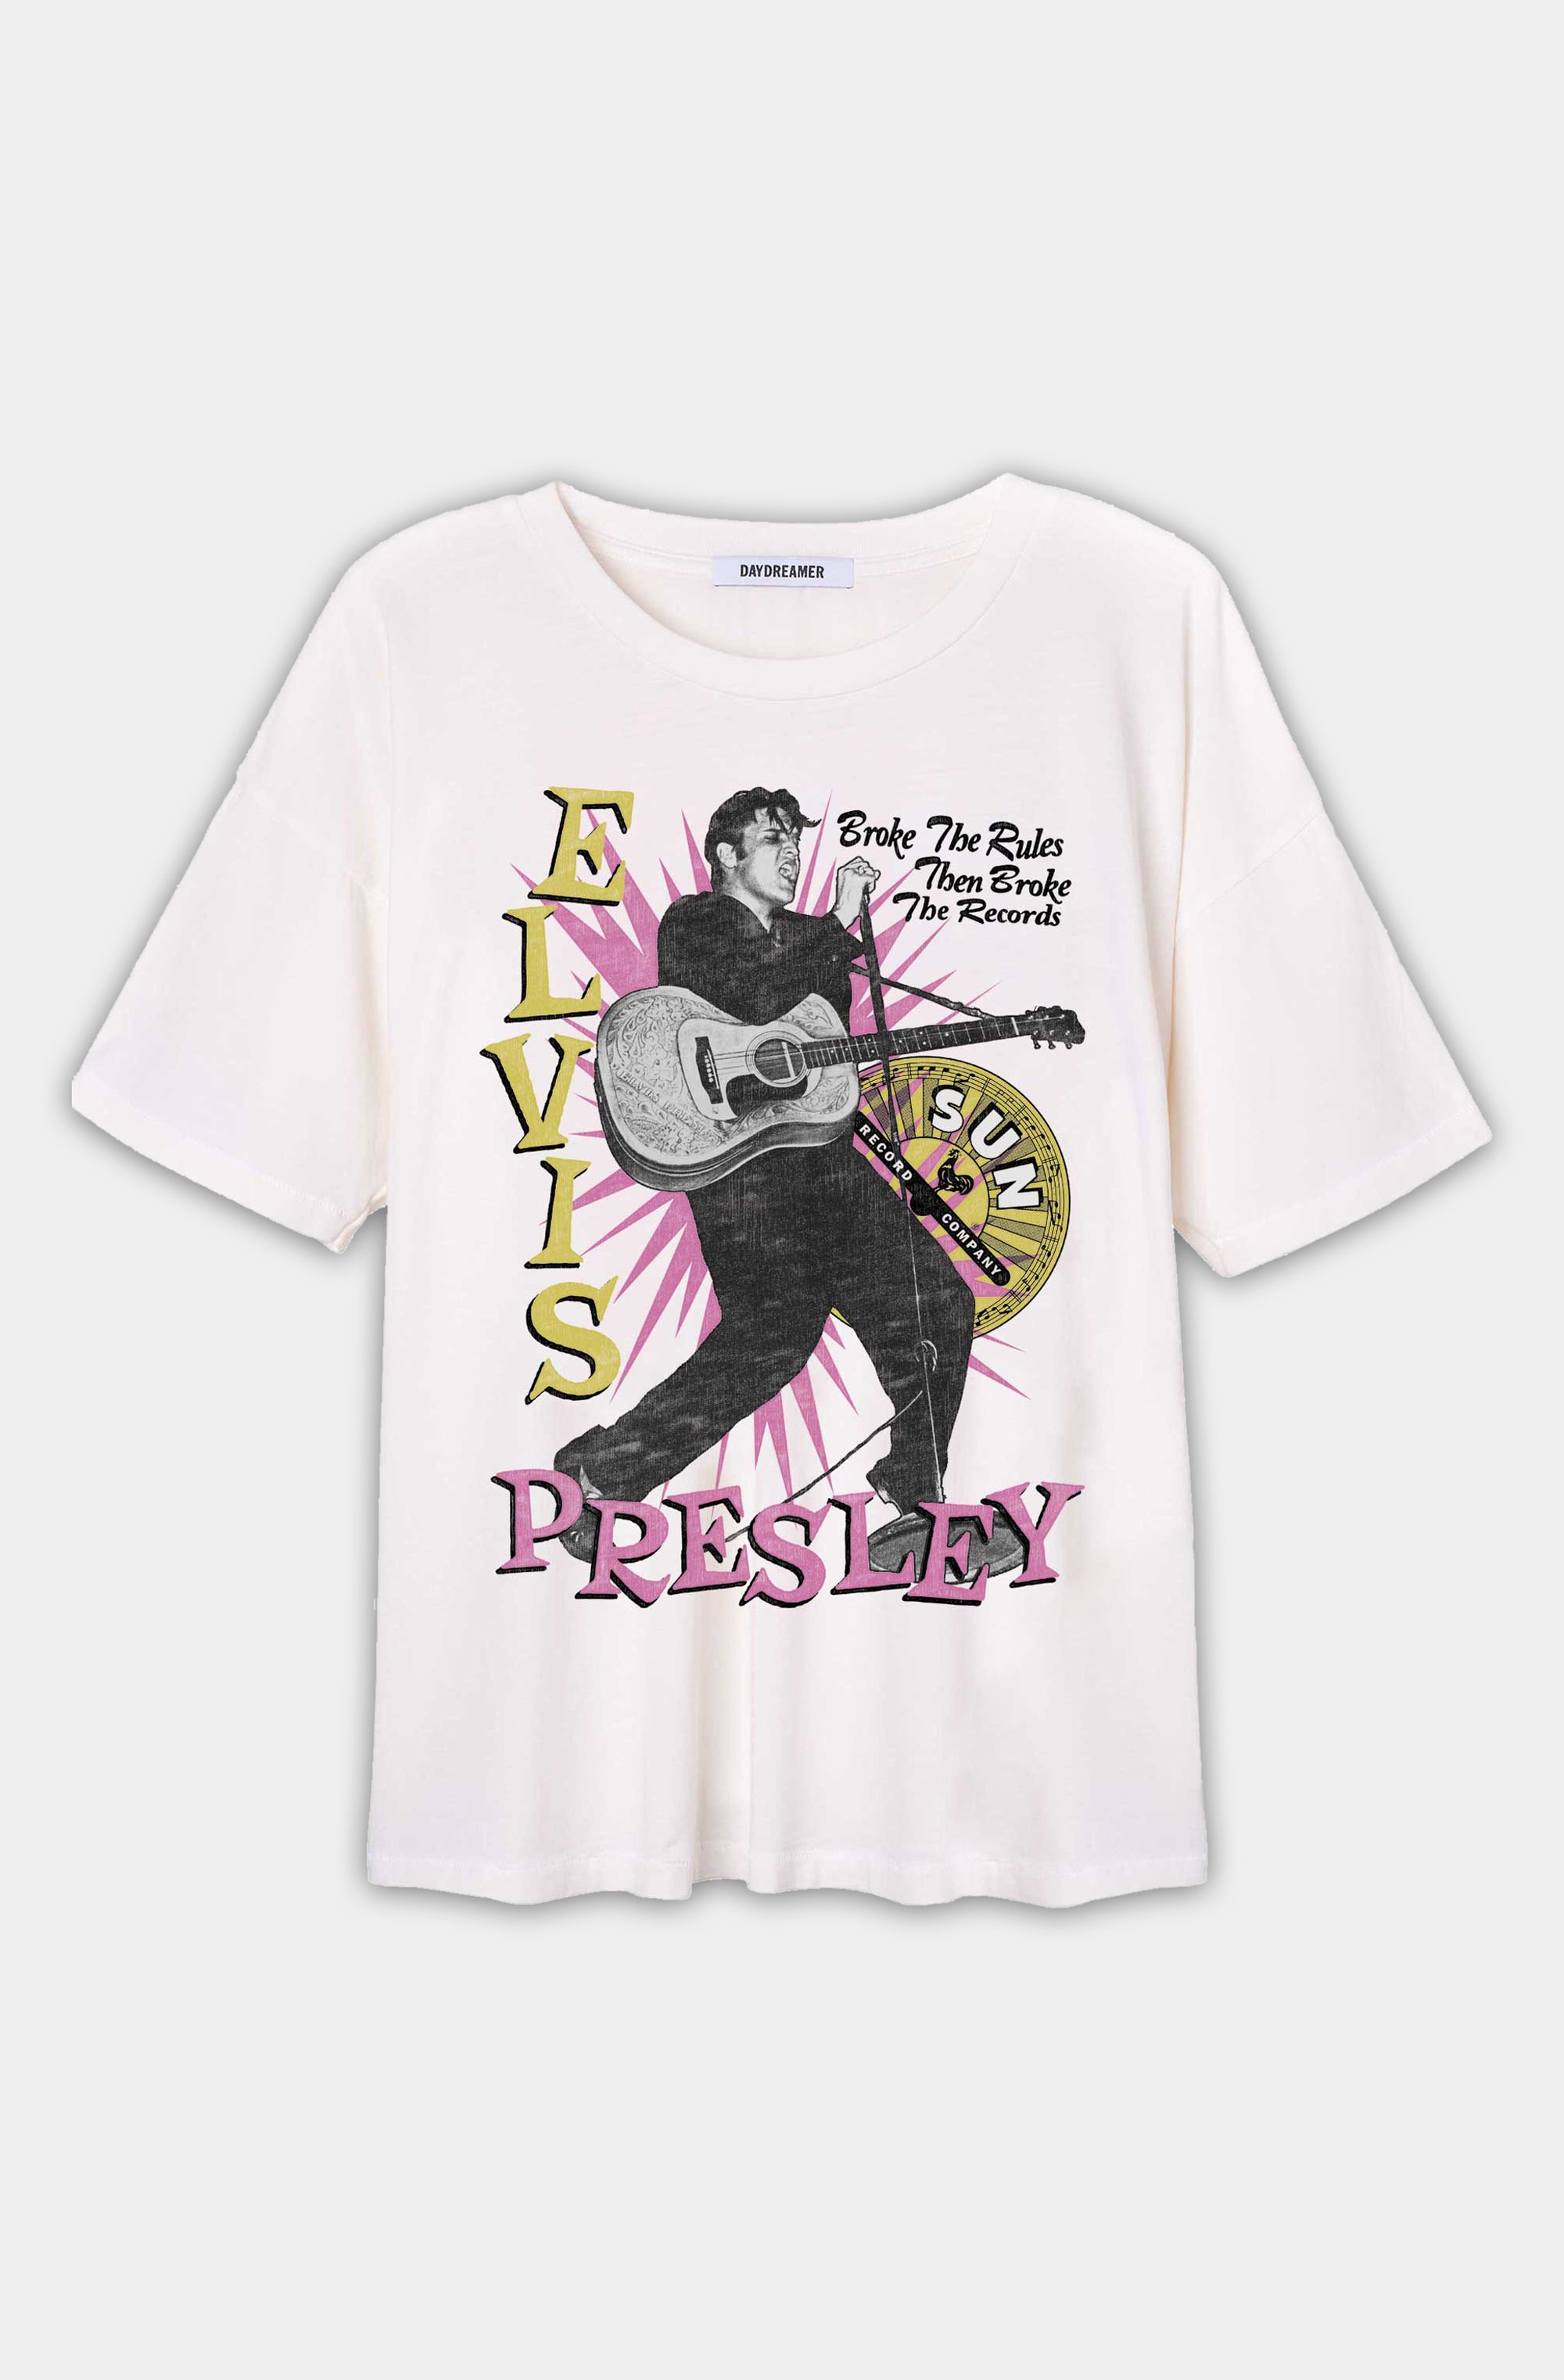 Sun Records x Elvis Broke The Rules Merch Tee